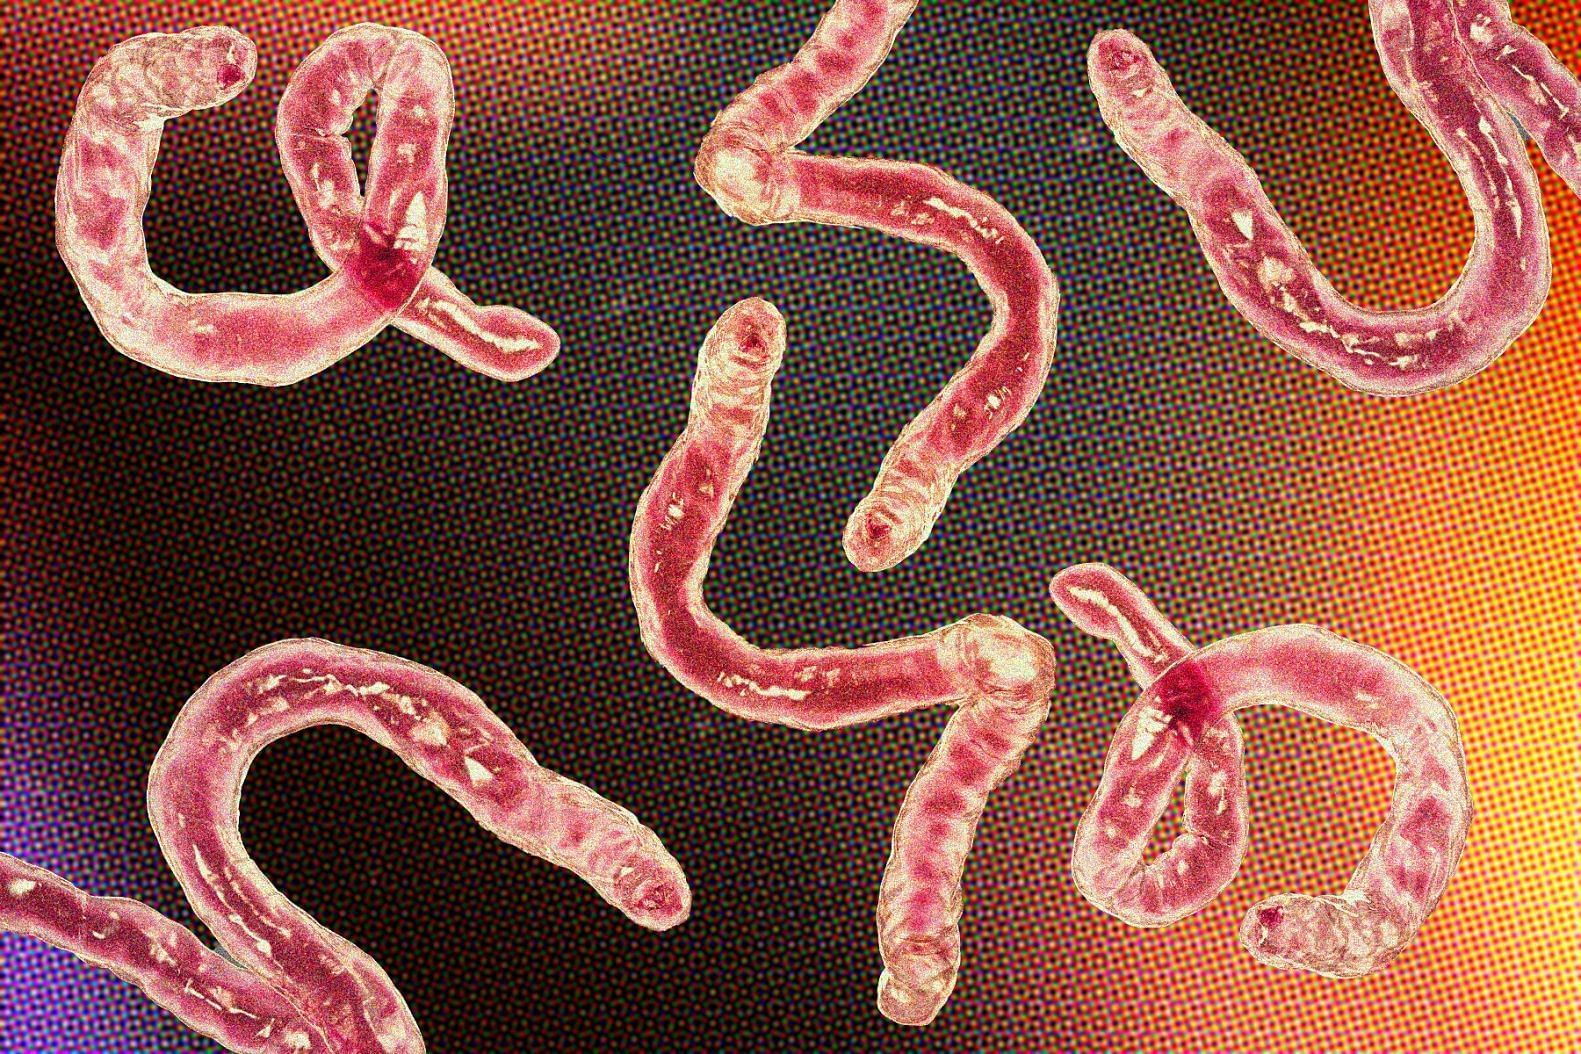 Viral parasite cleansing method explored (art image via Getty Images/Kateryna Kon)